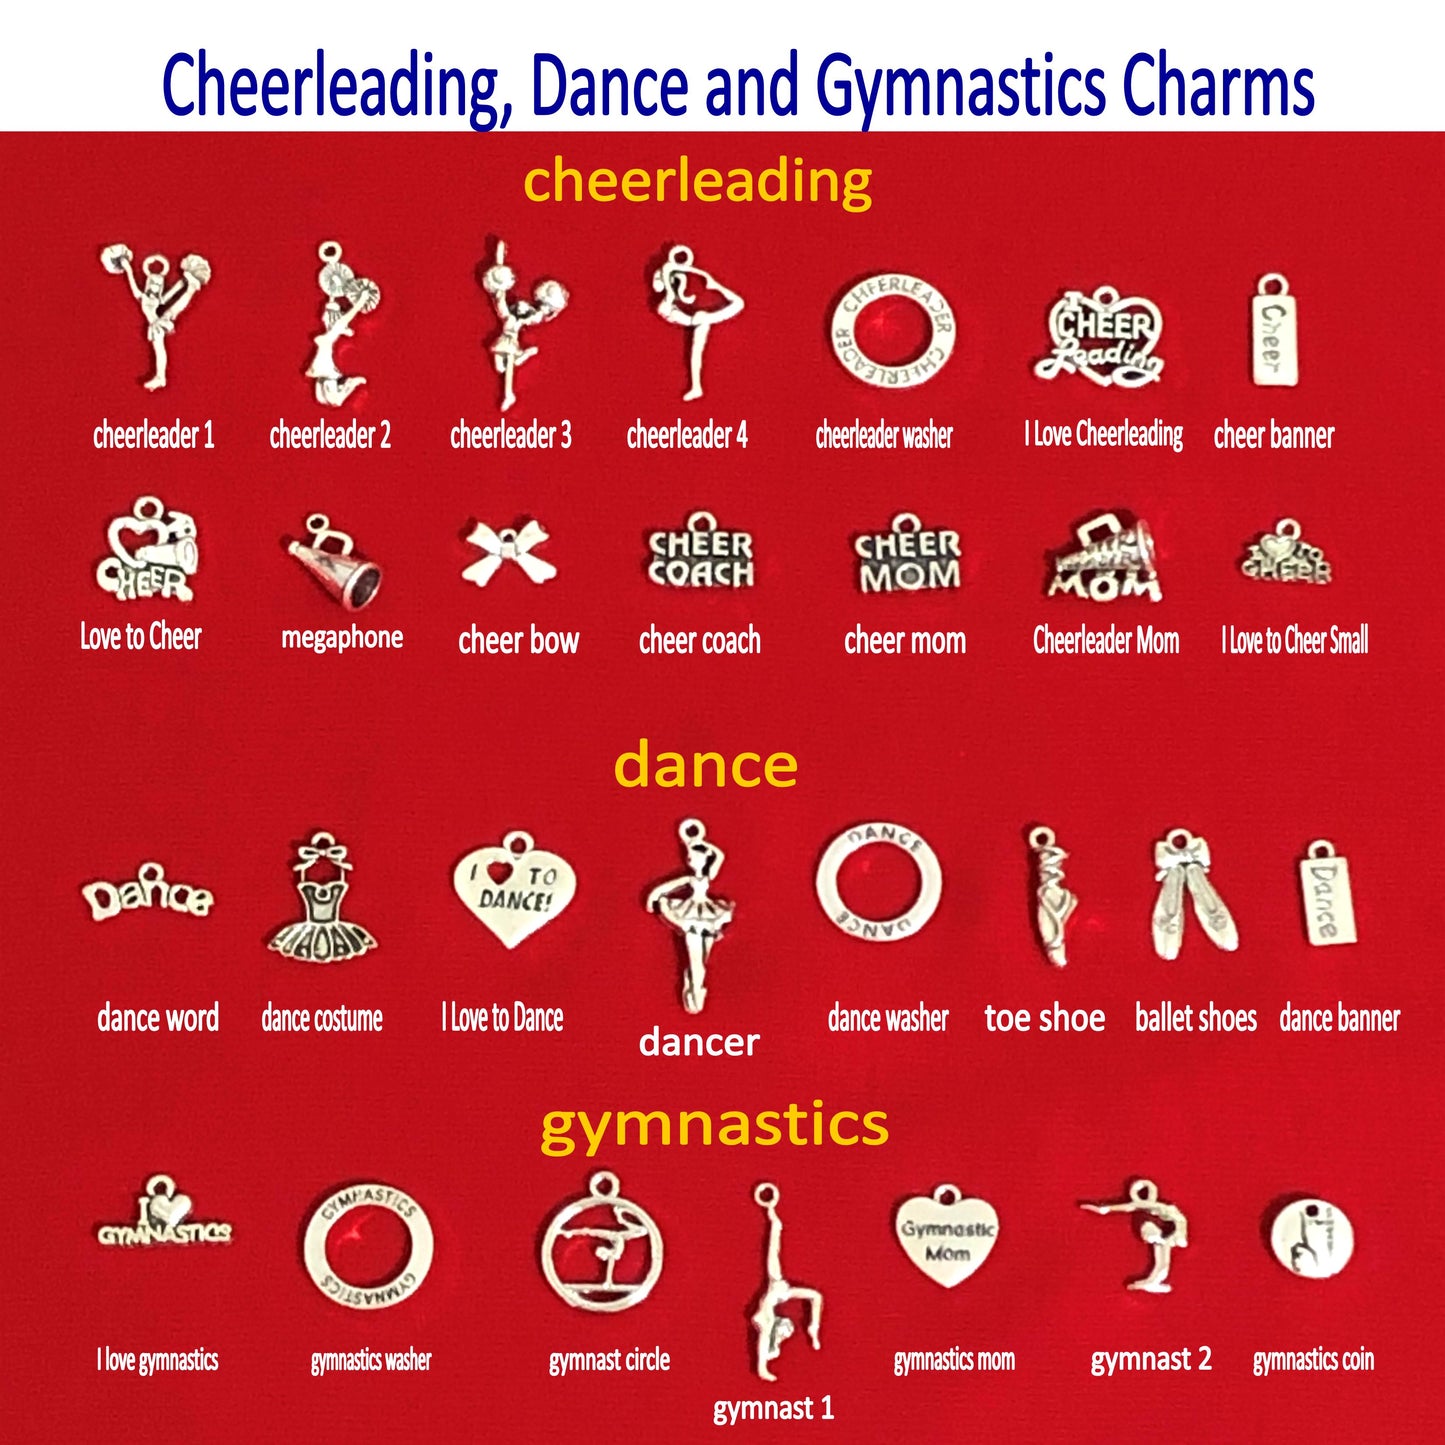 Create Your Own Cheerleading Charm Key Chain, Cheerleading Accessories - Cheer and Dance On Demand